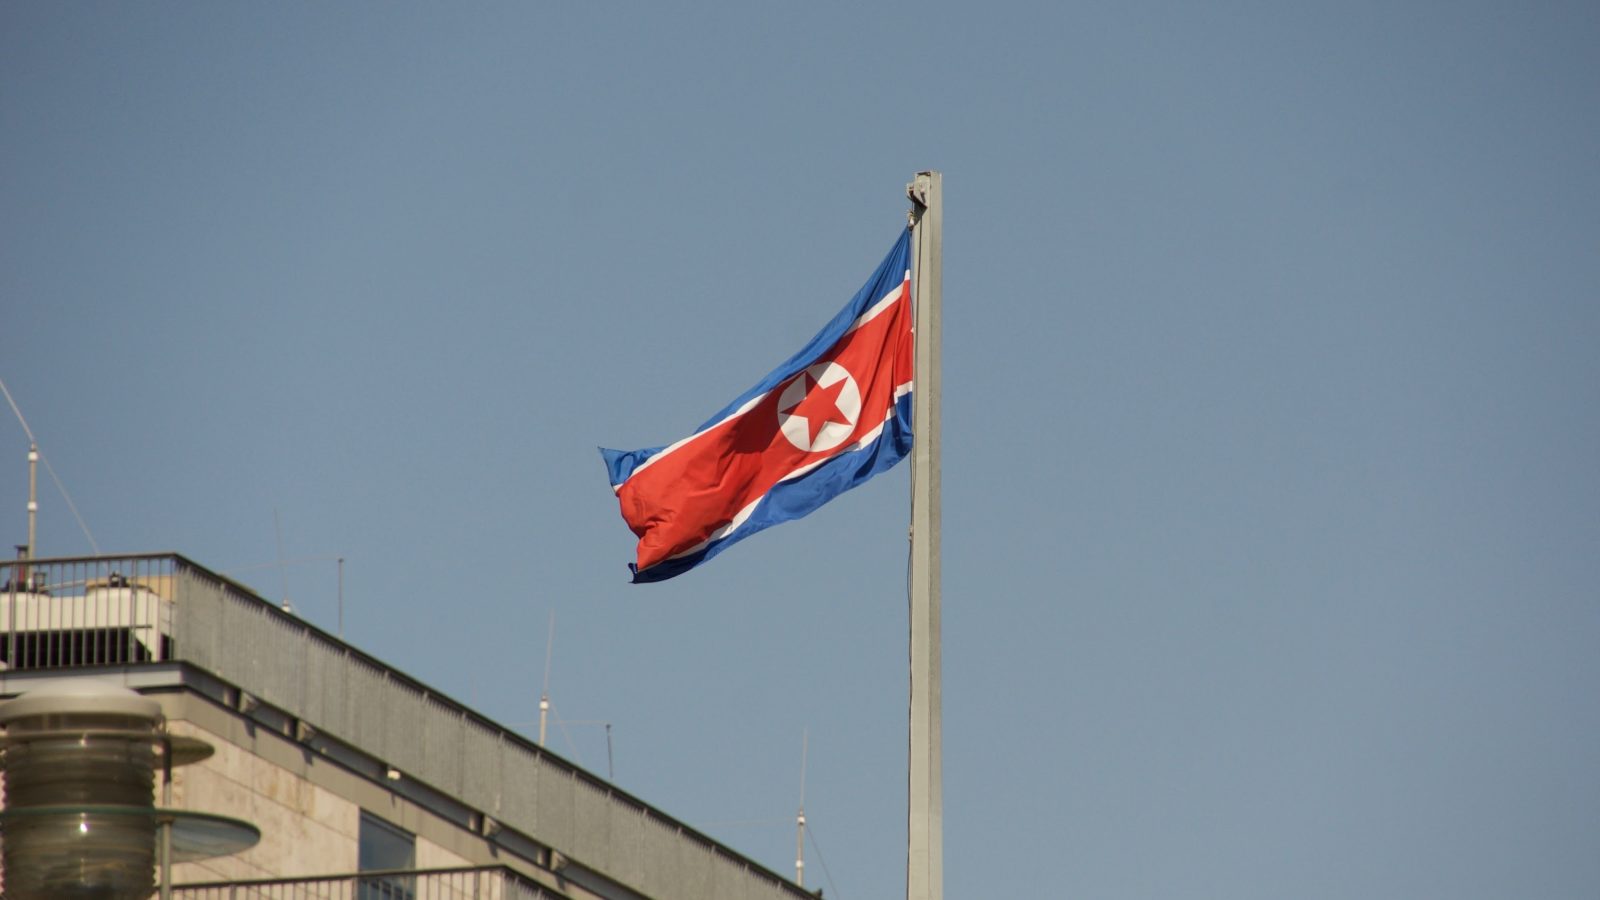 The flag of North Korea flies on a flagpole.